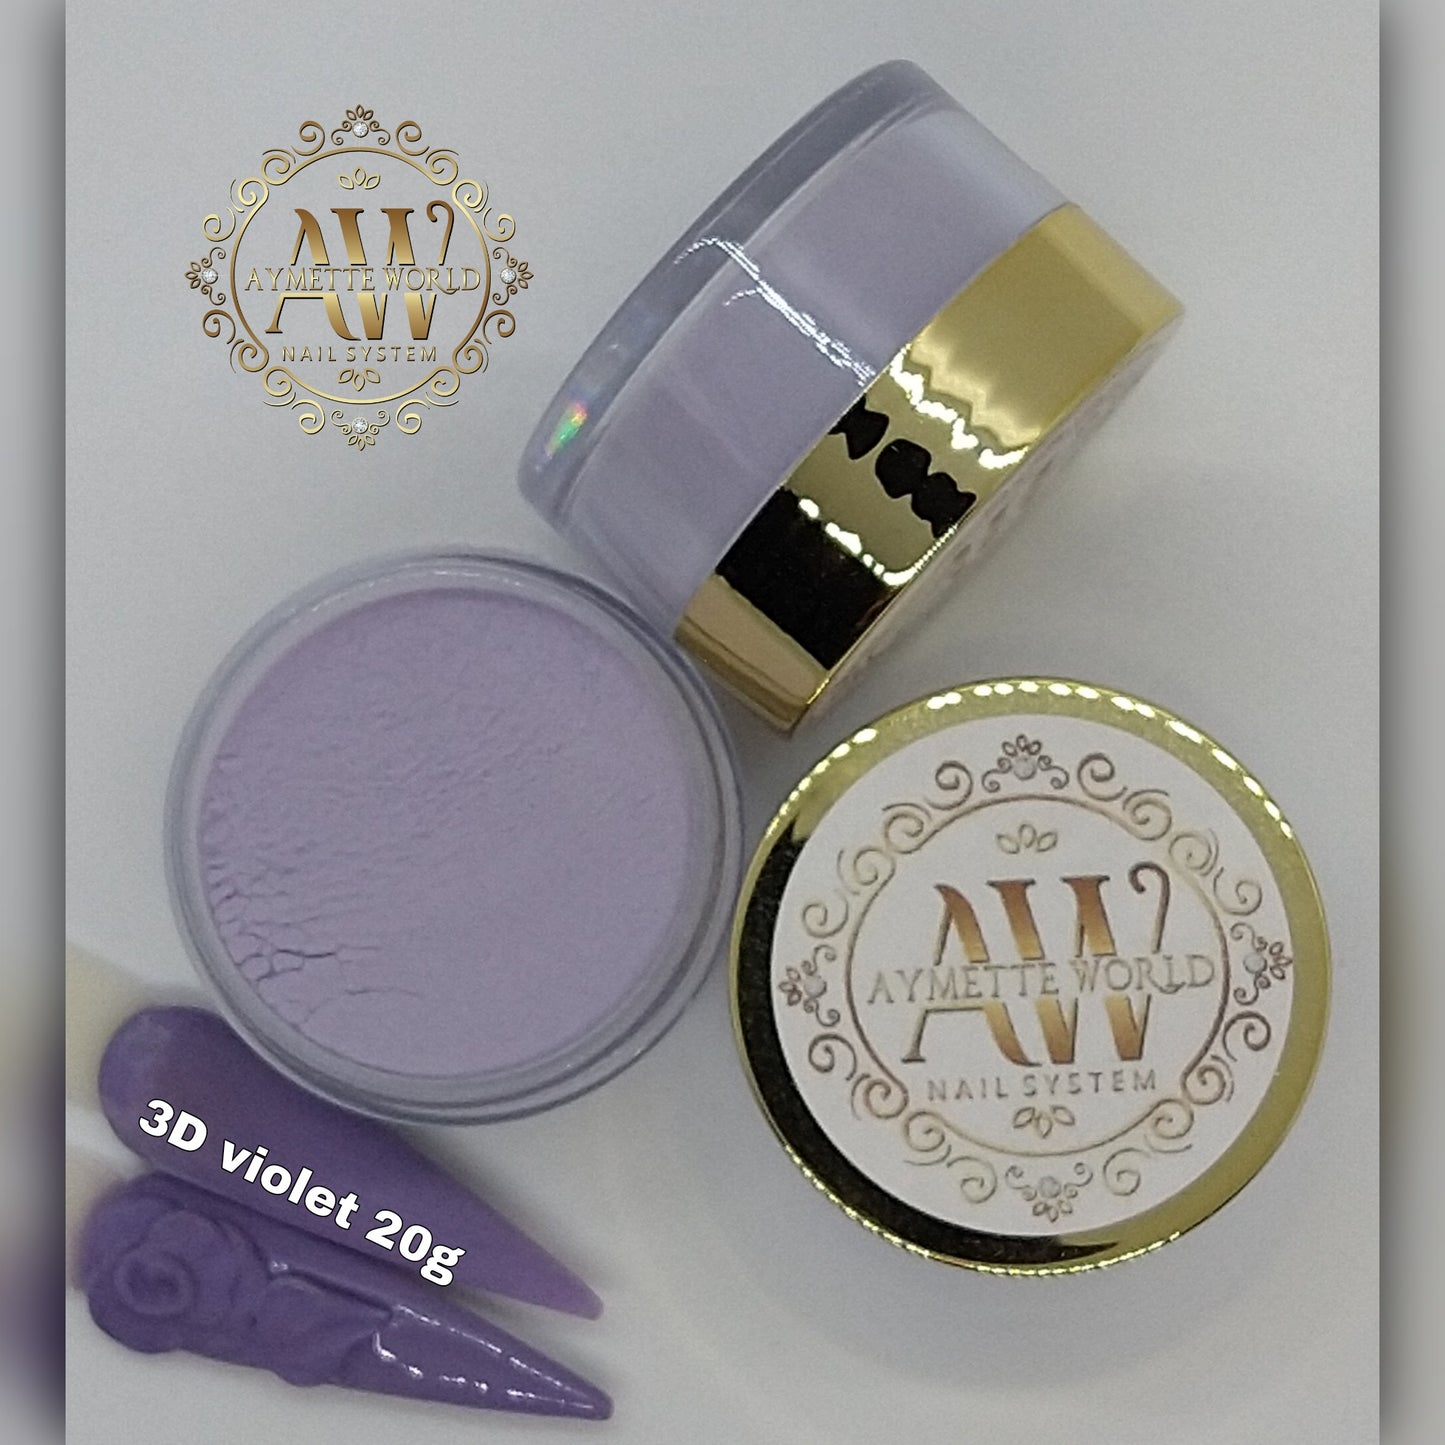 AW Acrylic Violet 20g 3D